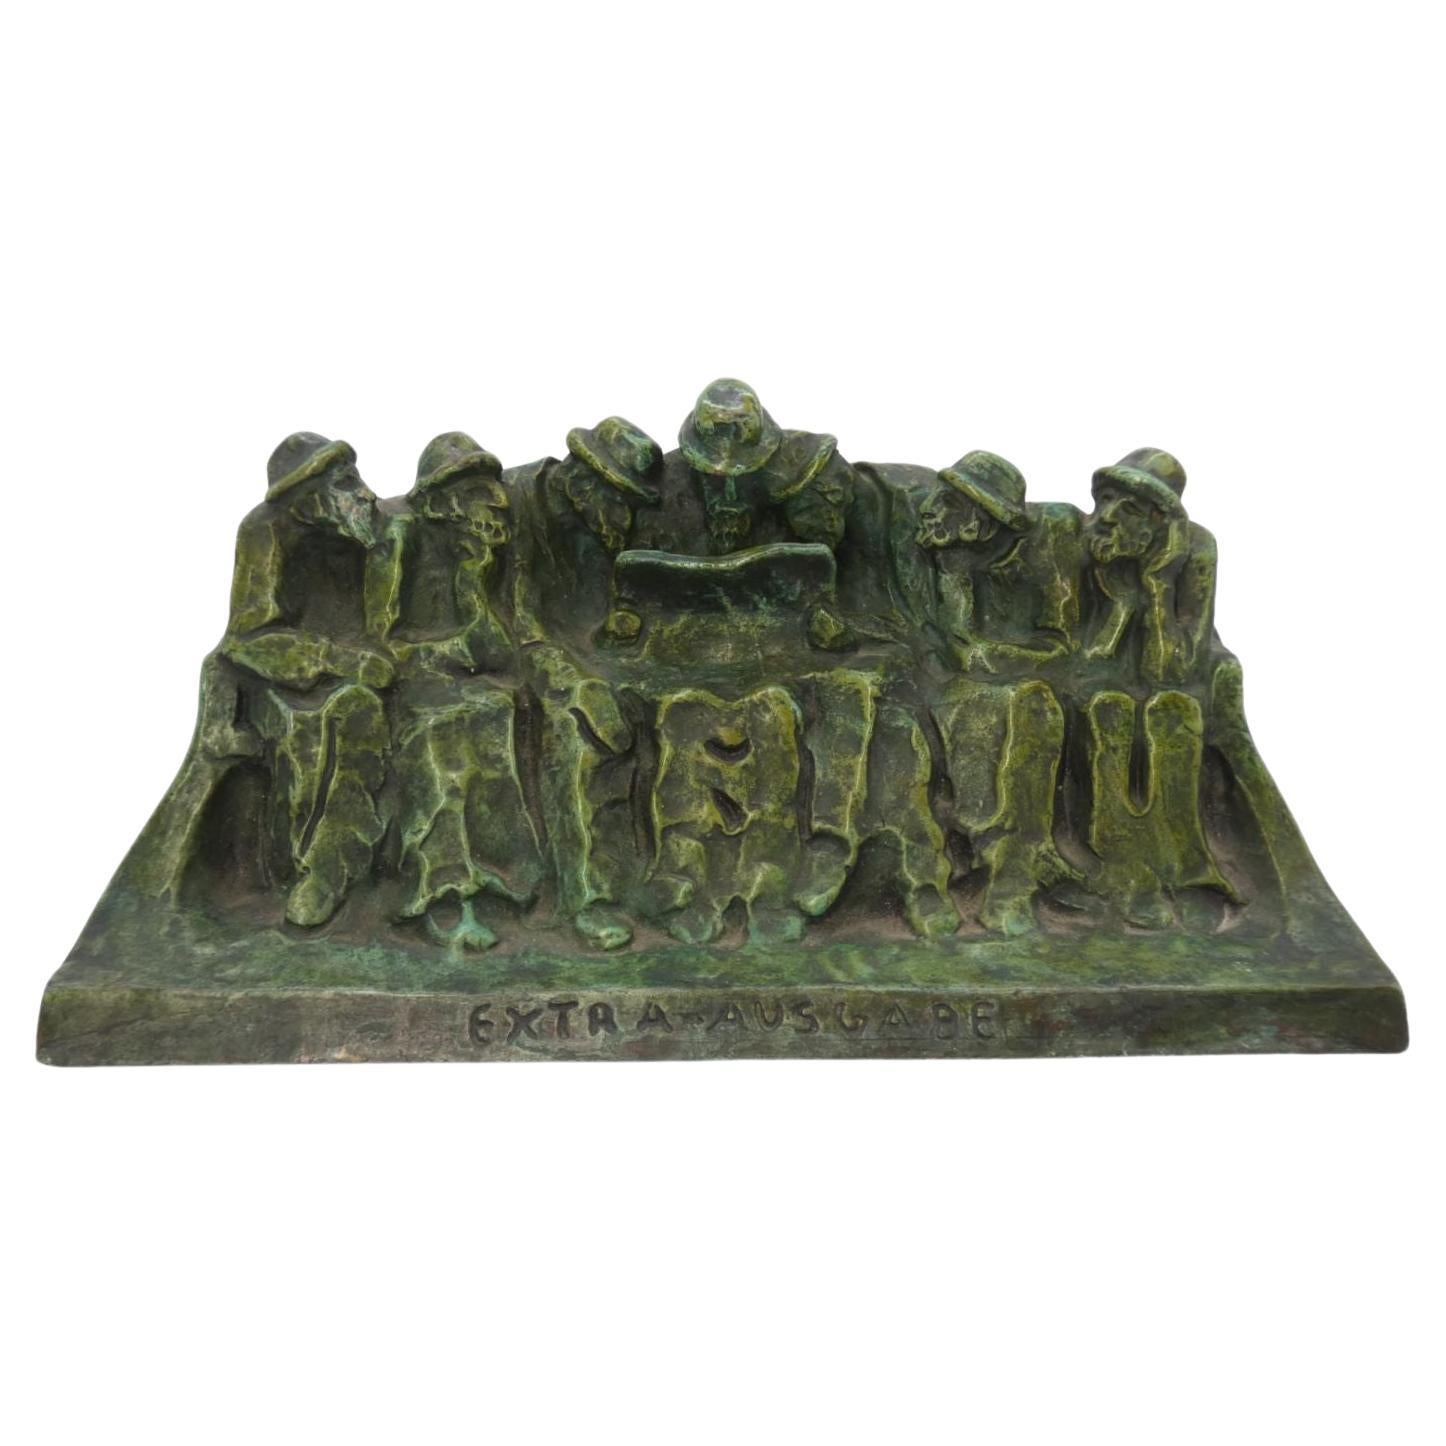 HÉLÈNE ZELEZNY-SCHOLTZ (1882-1974). A bronze sculpture “Reading of the newspaper